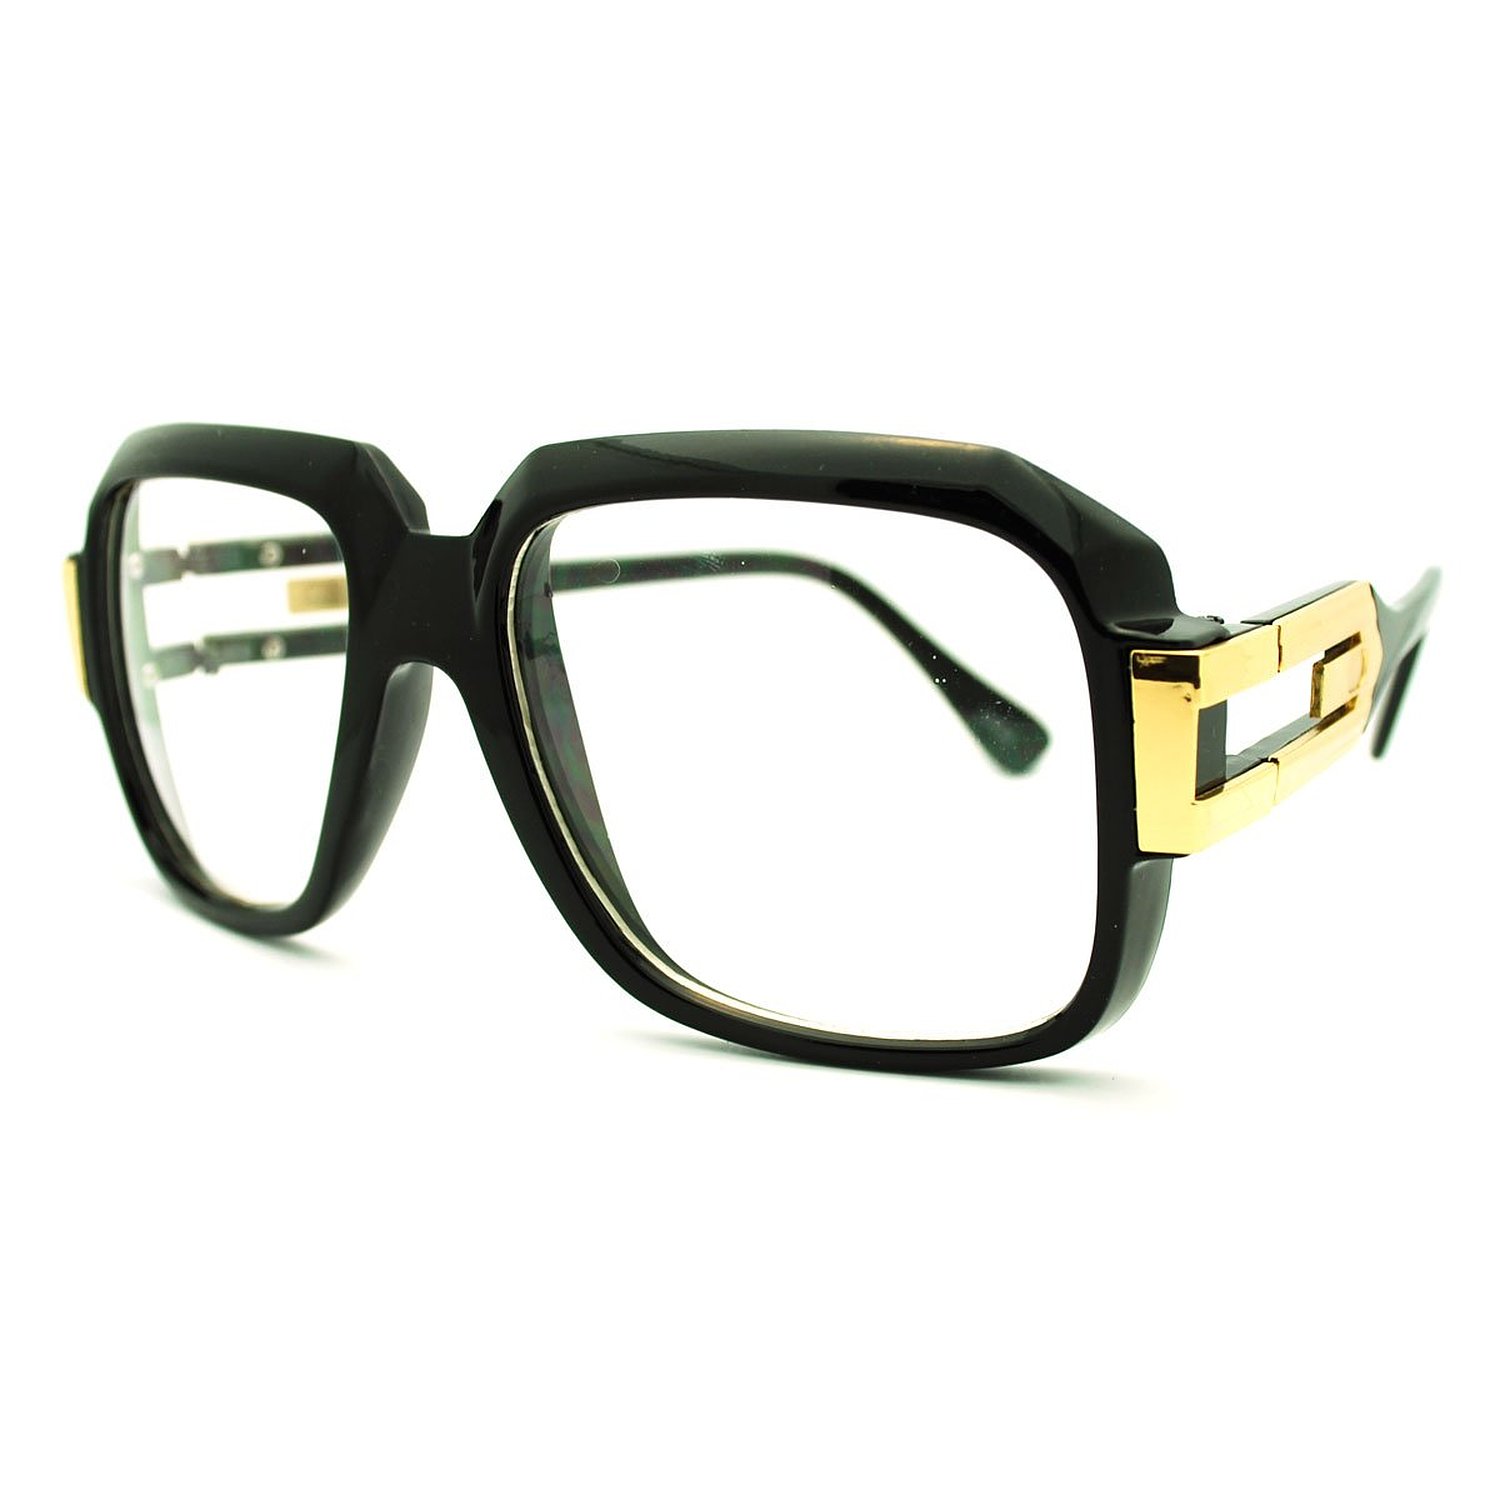 Run DMC Style Oversized Rectangular Hip Hop Glasses with Metal Horn Rim